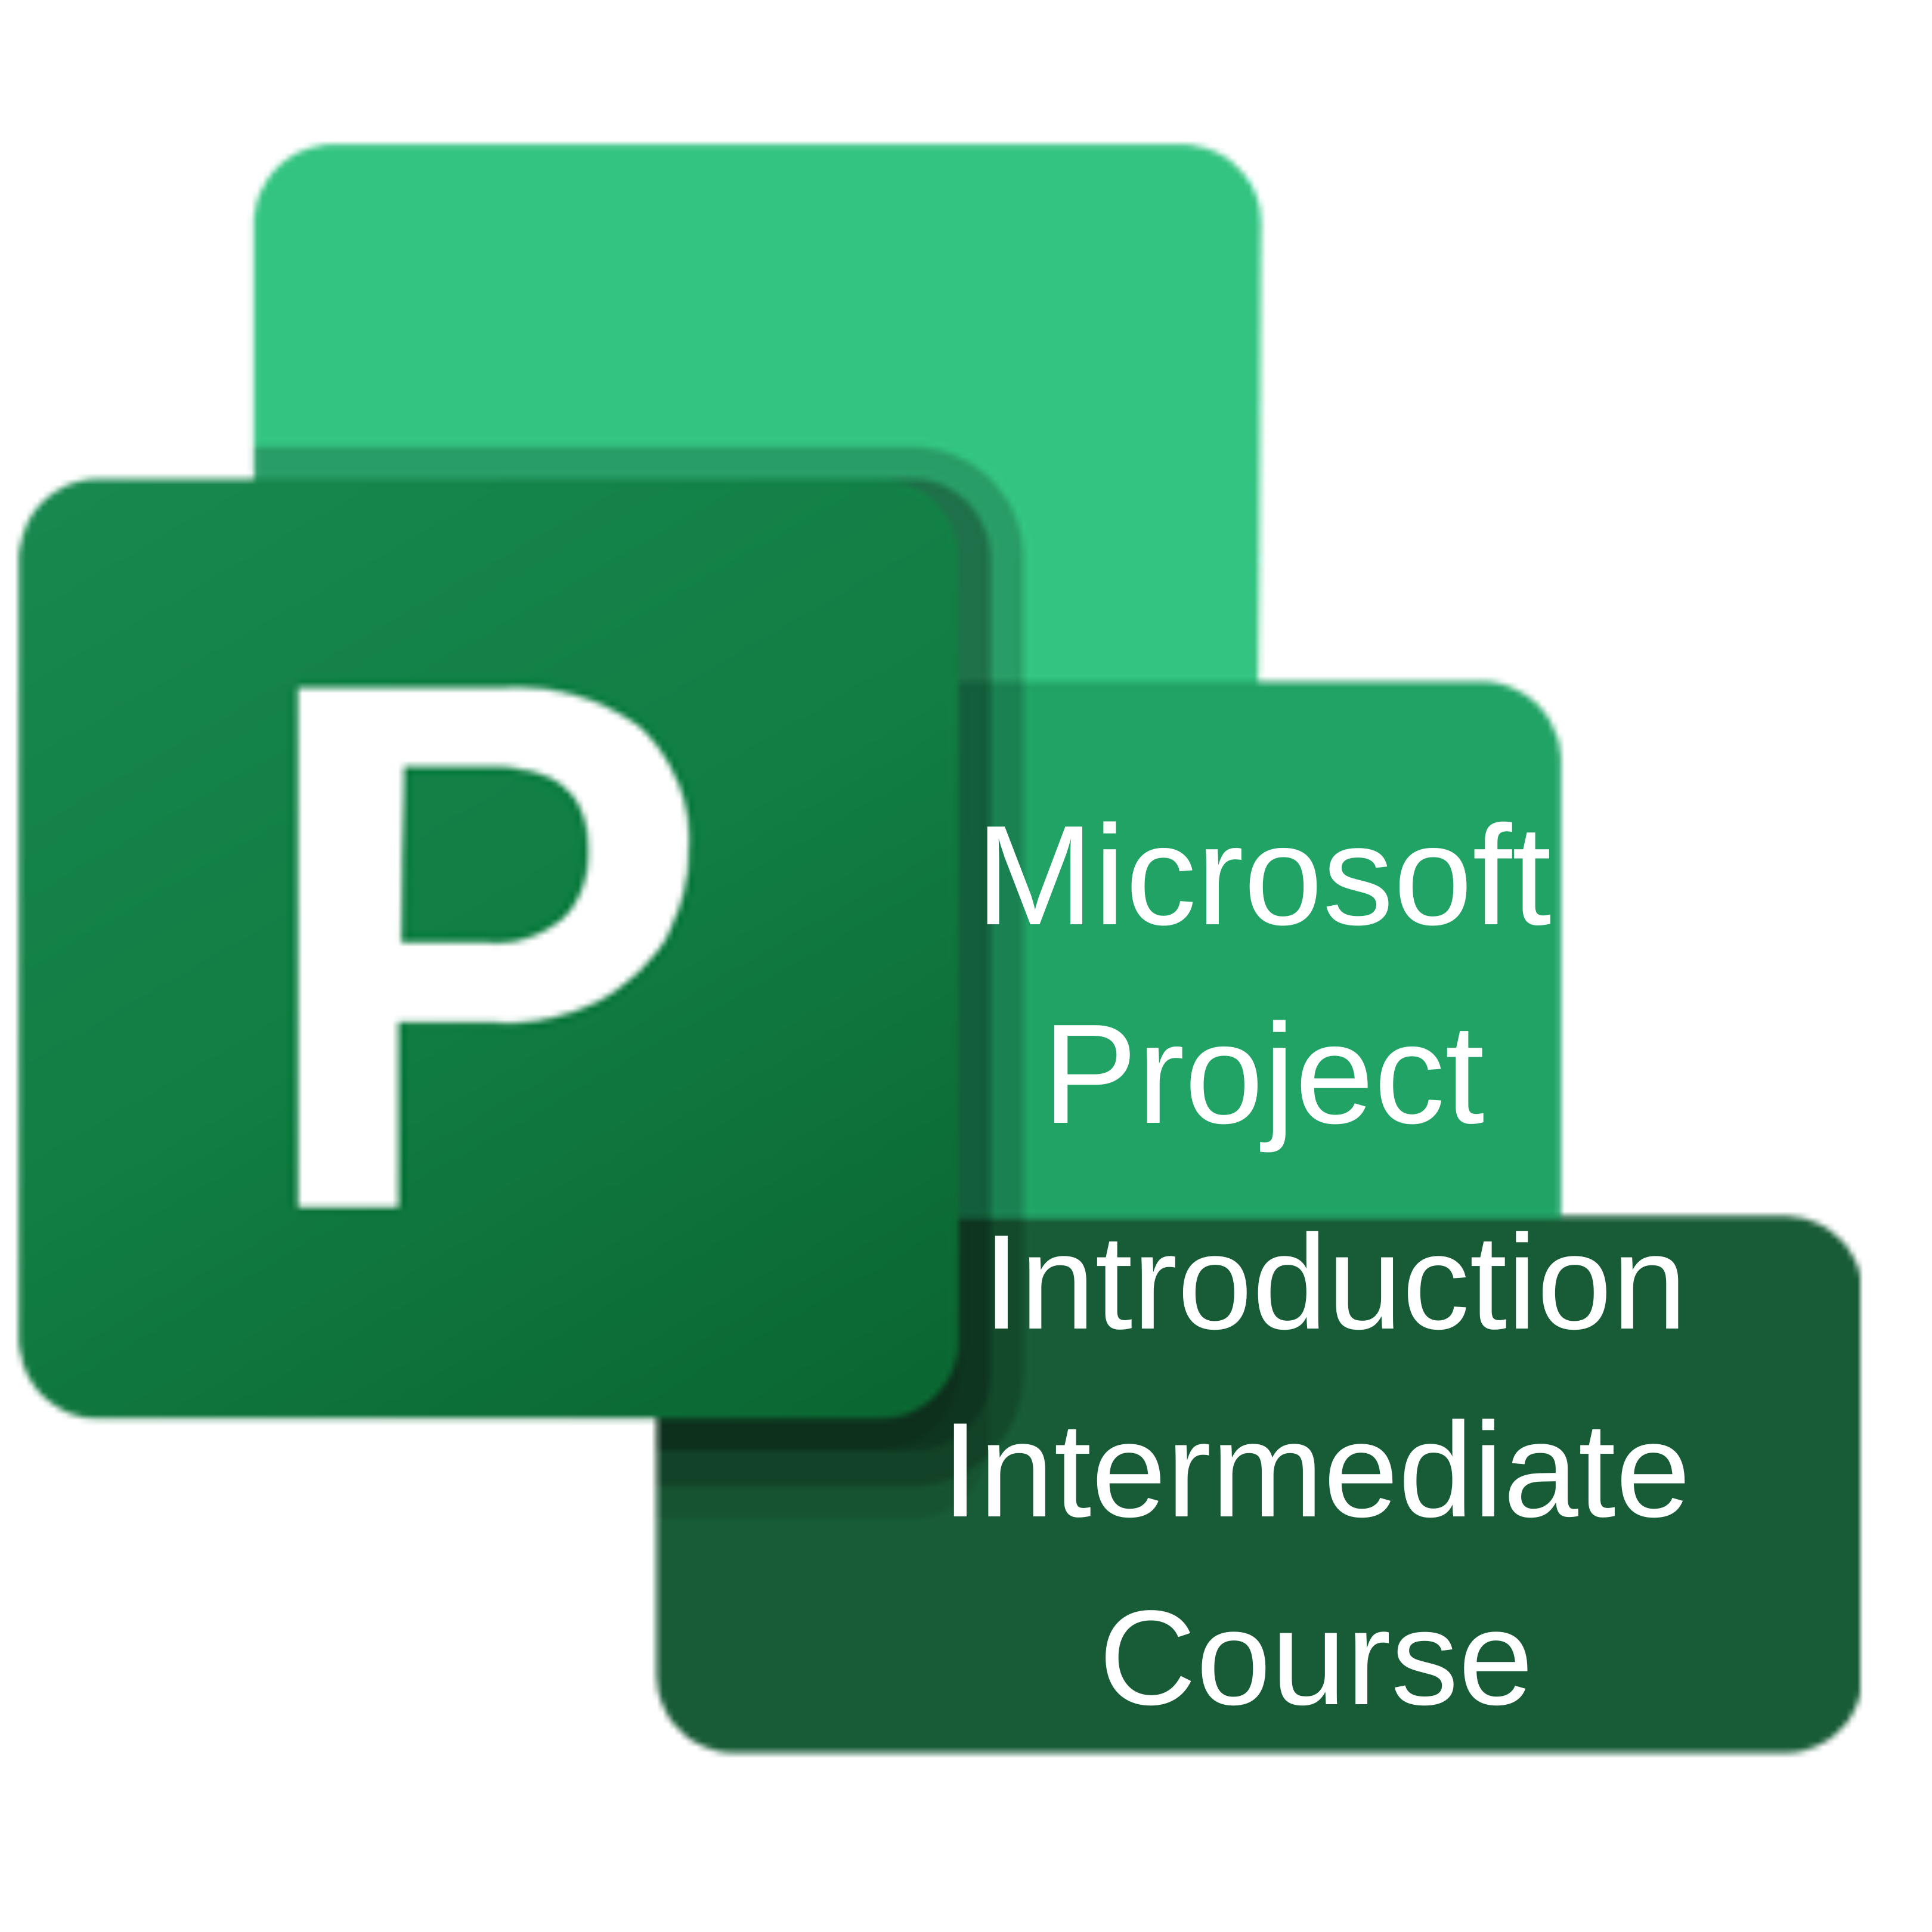 Microsoft Project Introduction Intermediate Course